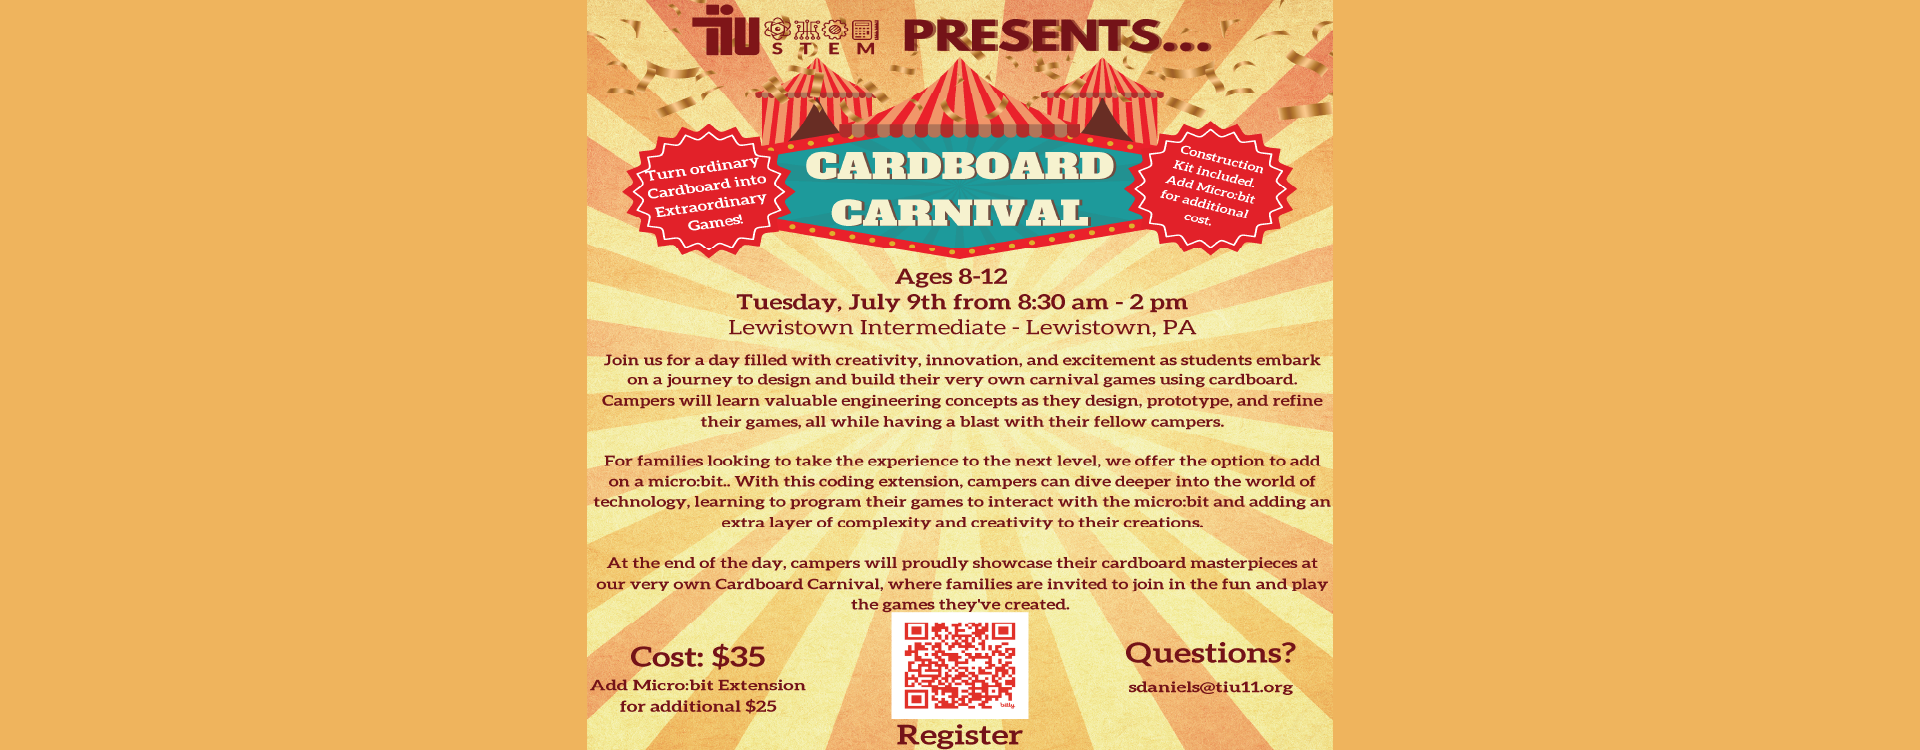 MC Cardboard Carnival - click link to see PDF version